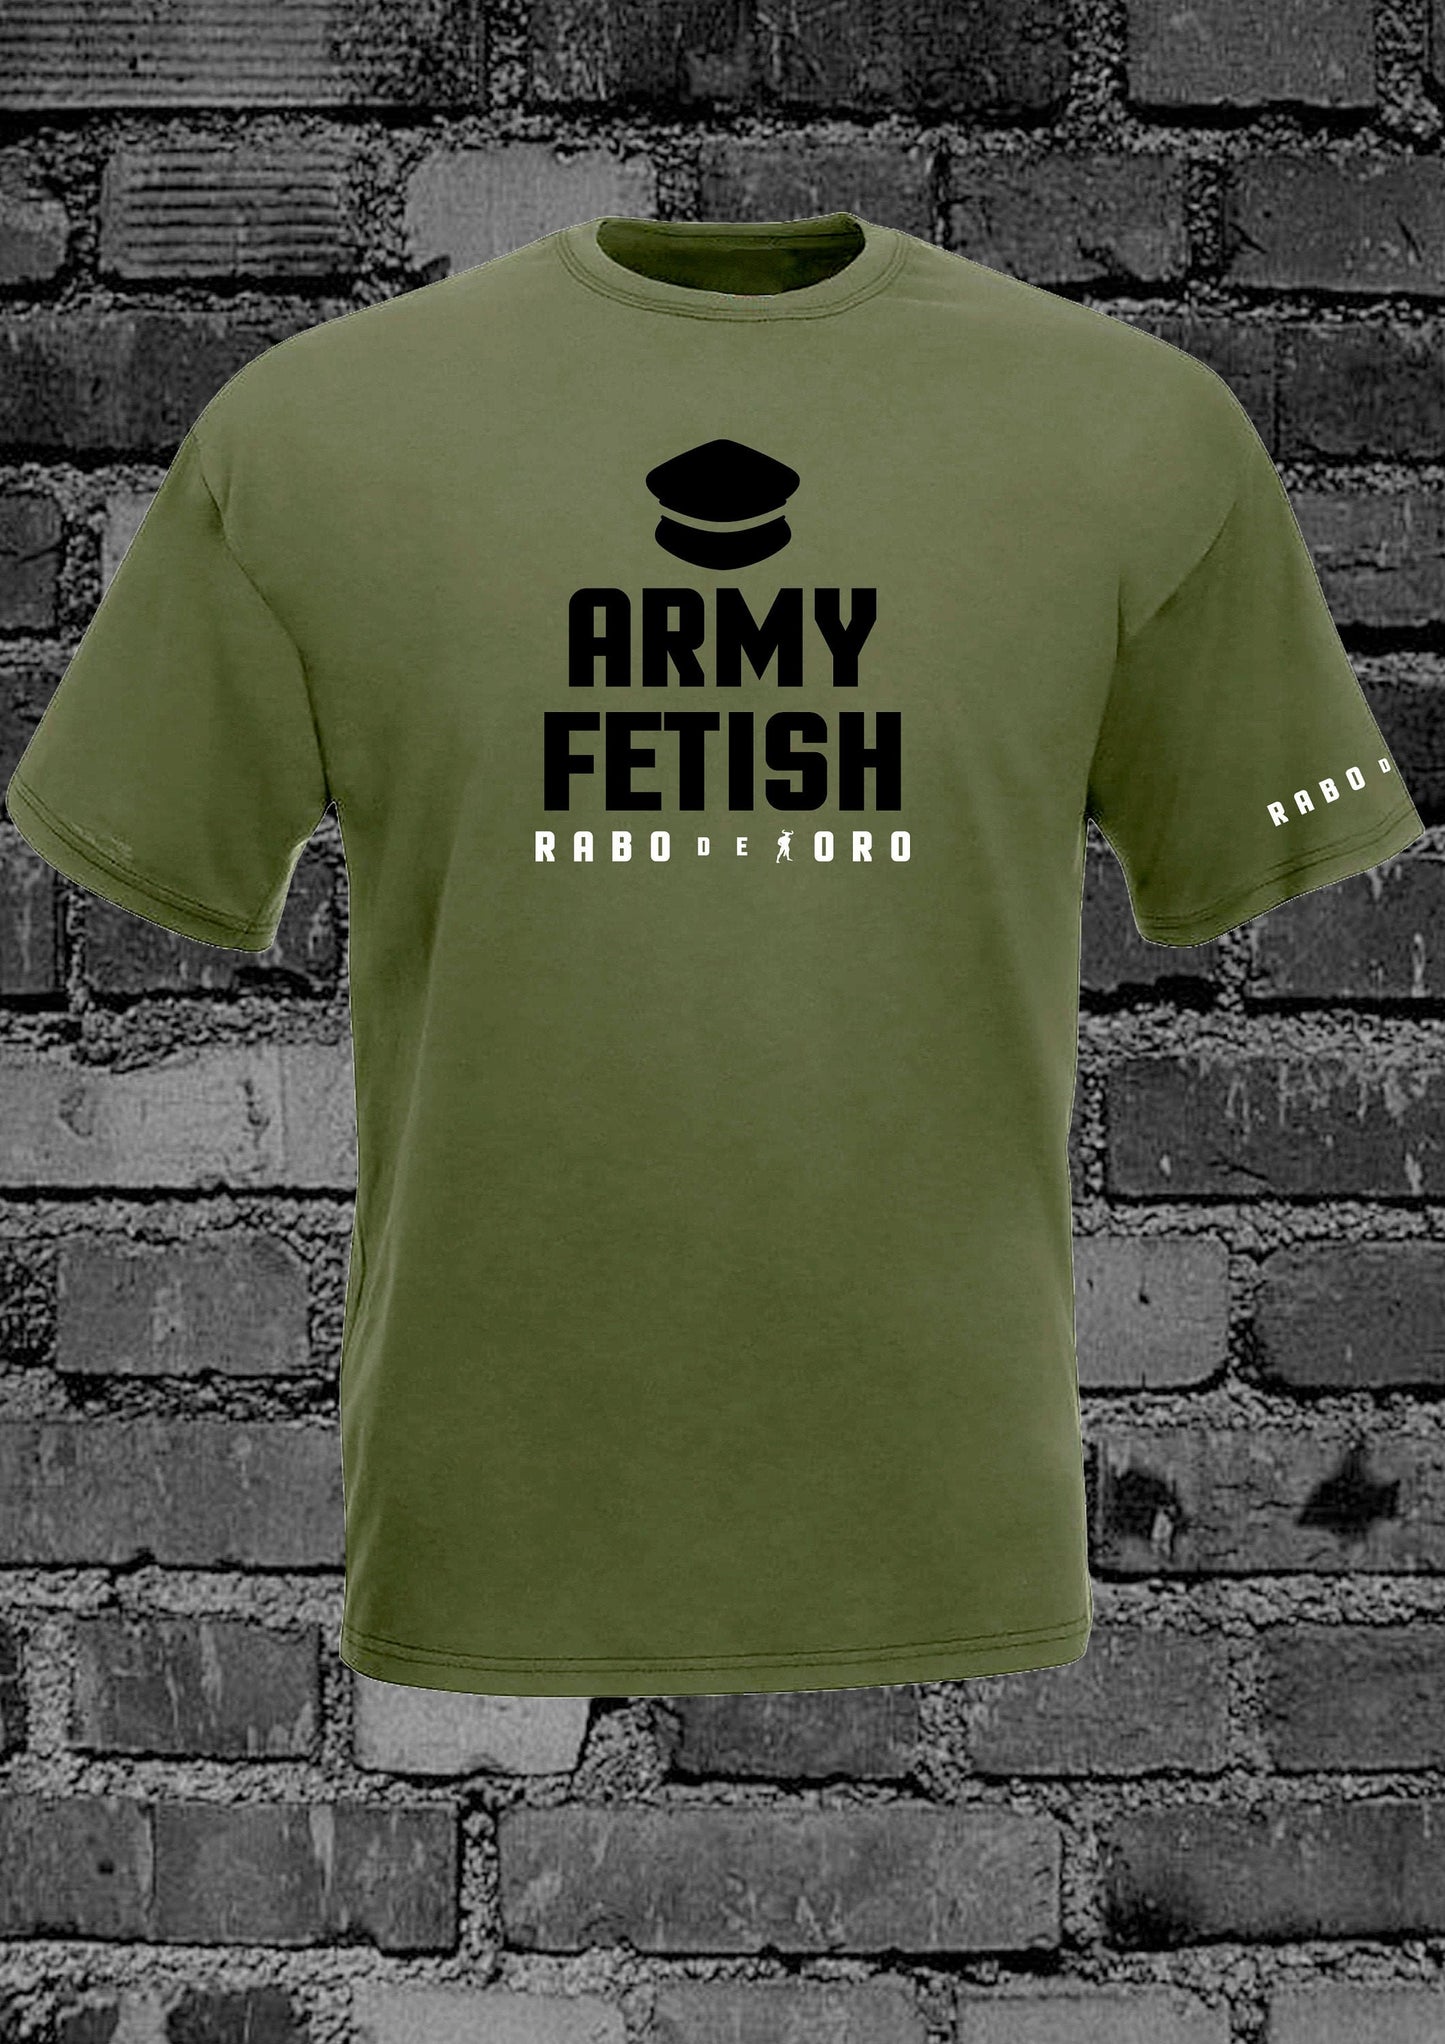 ARMY FETISH Camiseta verde oliva con detalle de gorra militar negra